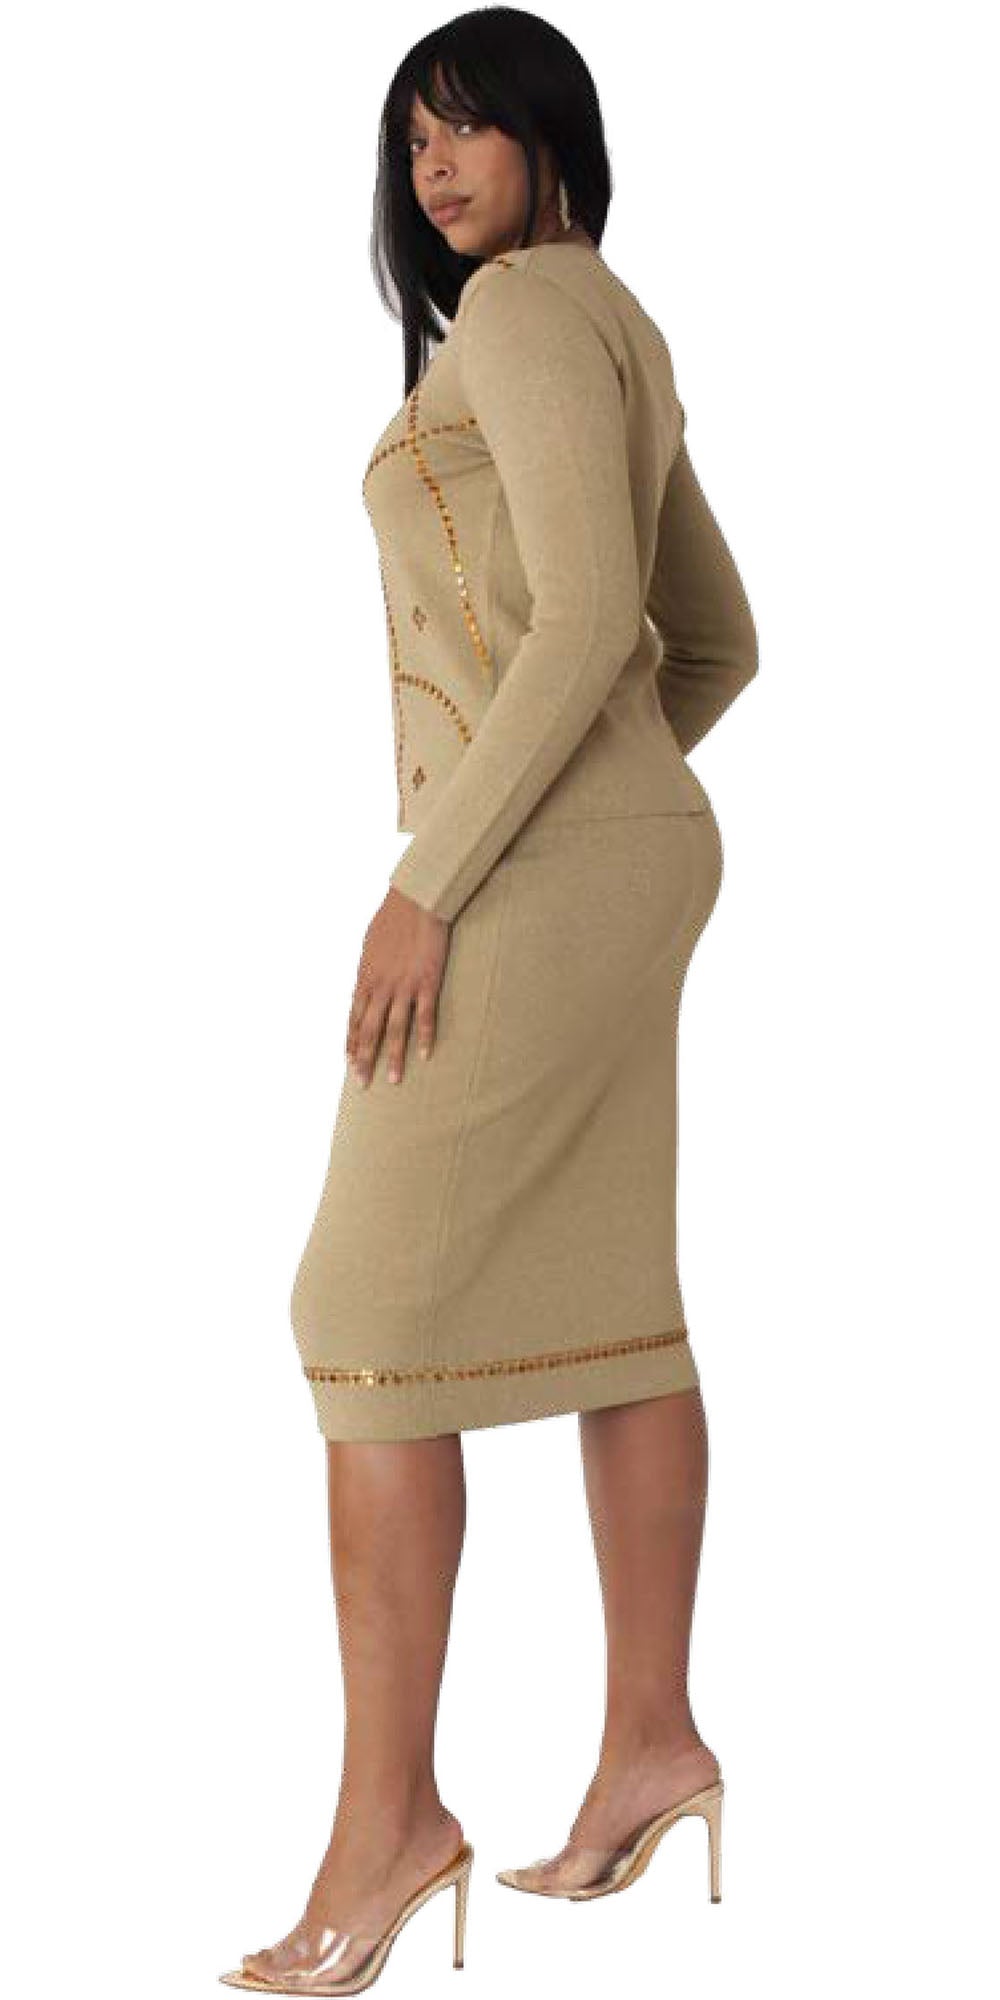 Kayla Knit 5348 - Olive - Gold Stud Trim Skirt Suit